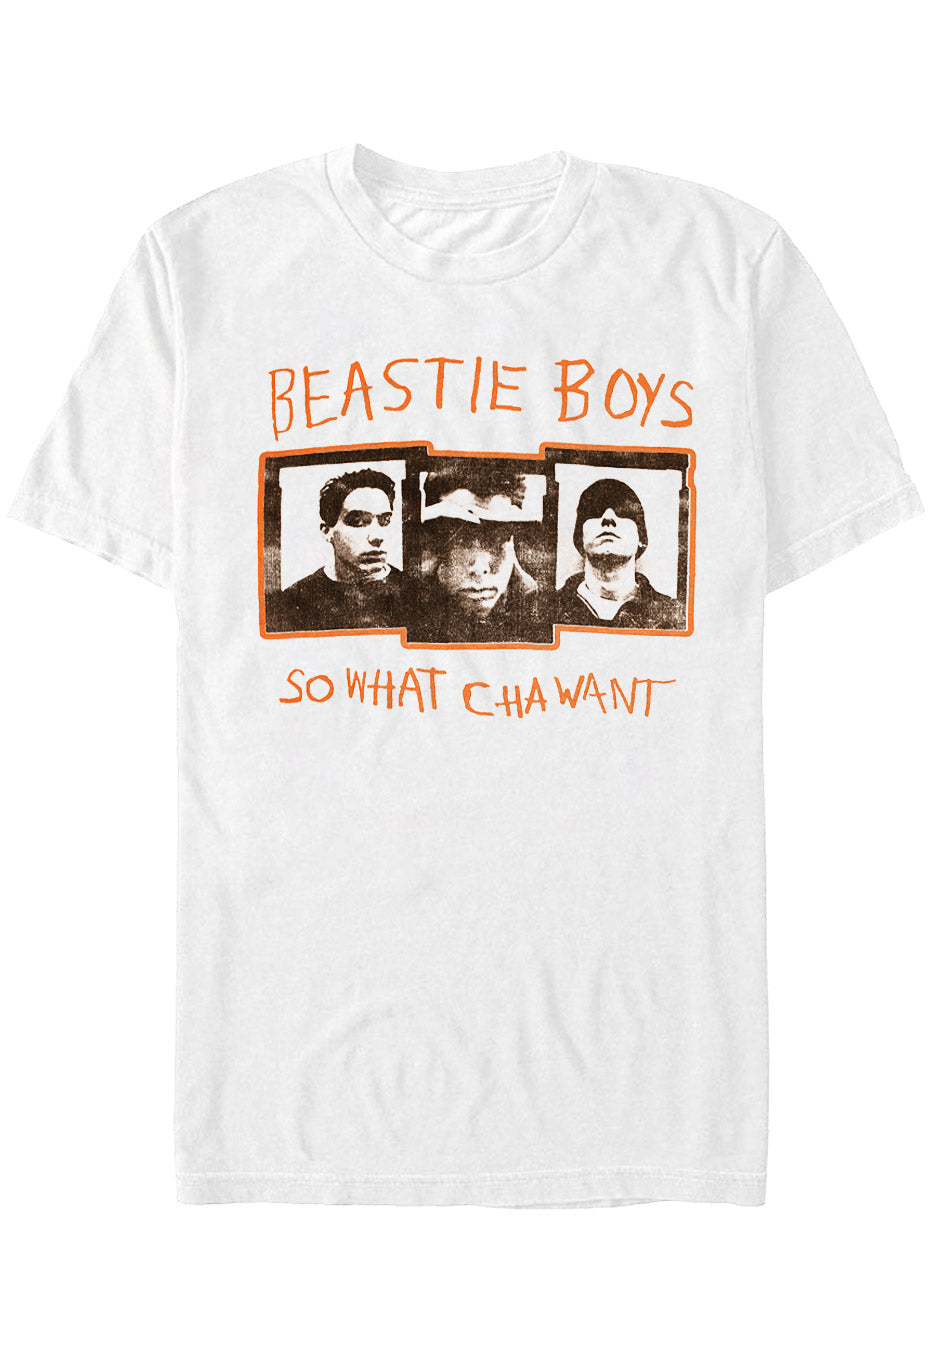 Beastie Boys - So What Cha Want White - T-Shirt